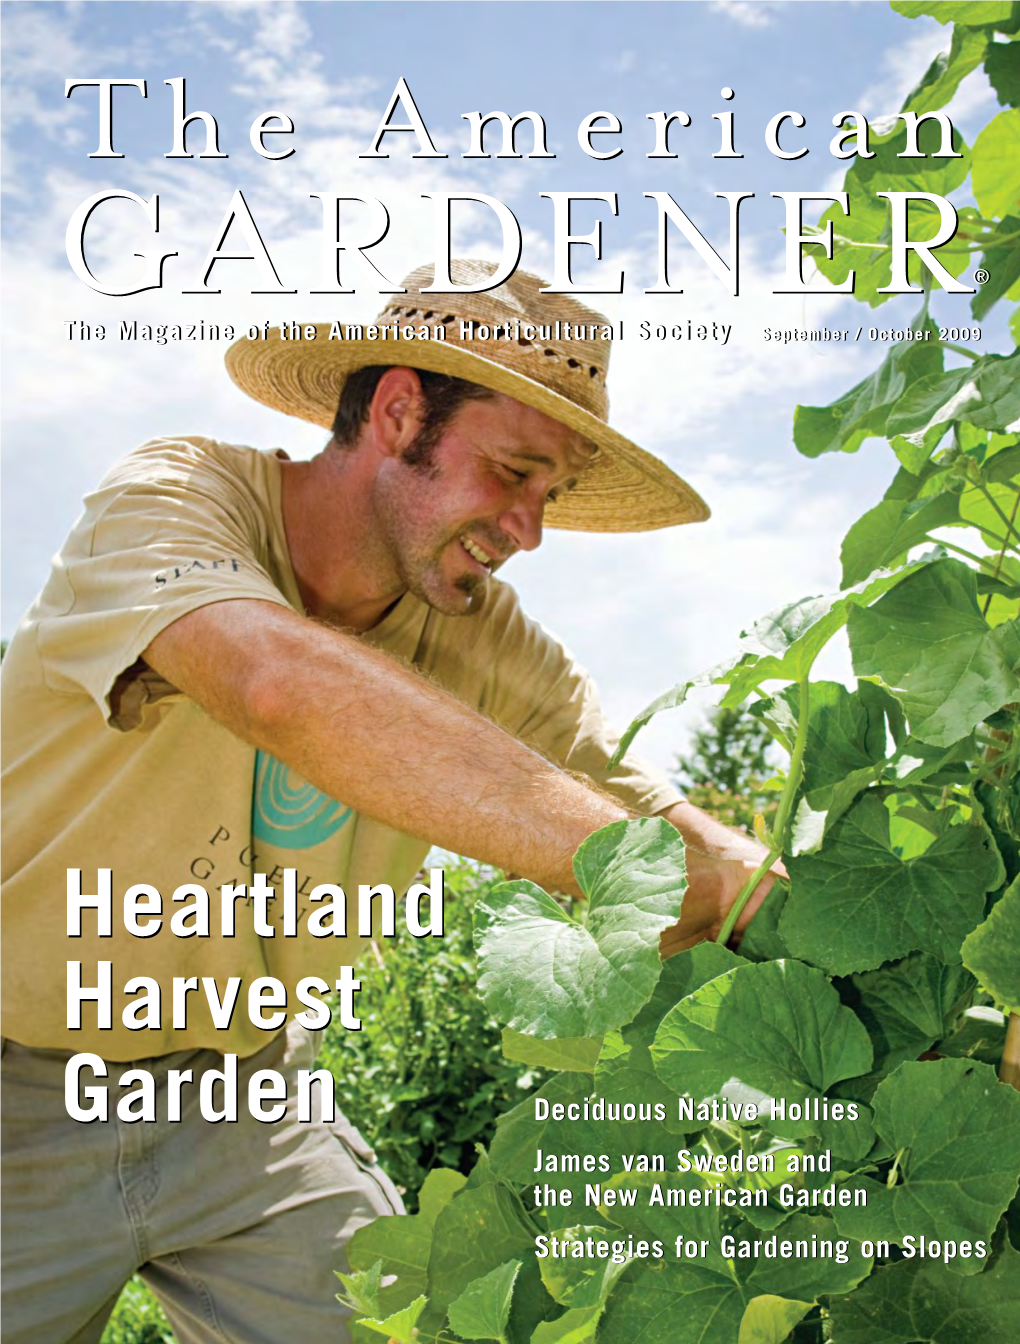 GARDENERGARDENER® Thethe Magazinemagazine Ofof Thethe Aamericanmerican Horticulturalhorticultural Societysociety September / October 2009